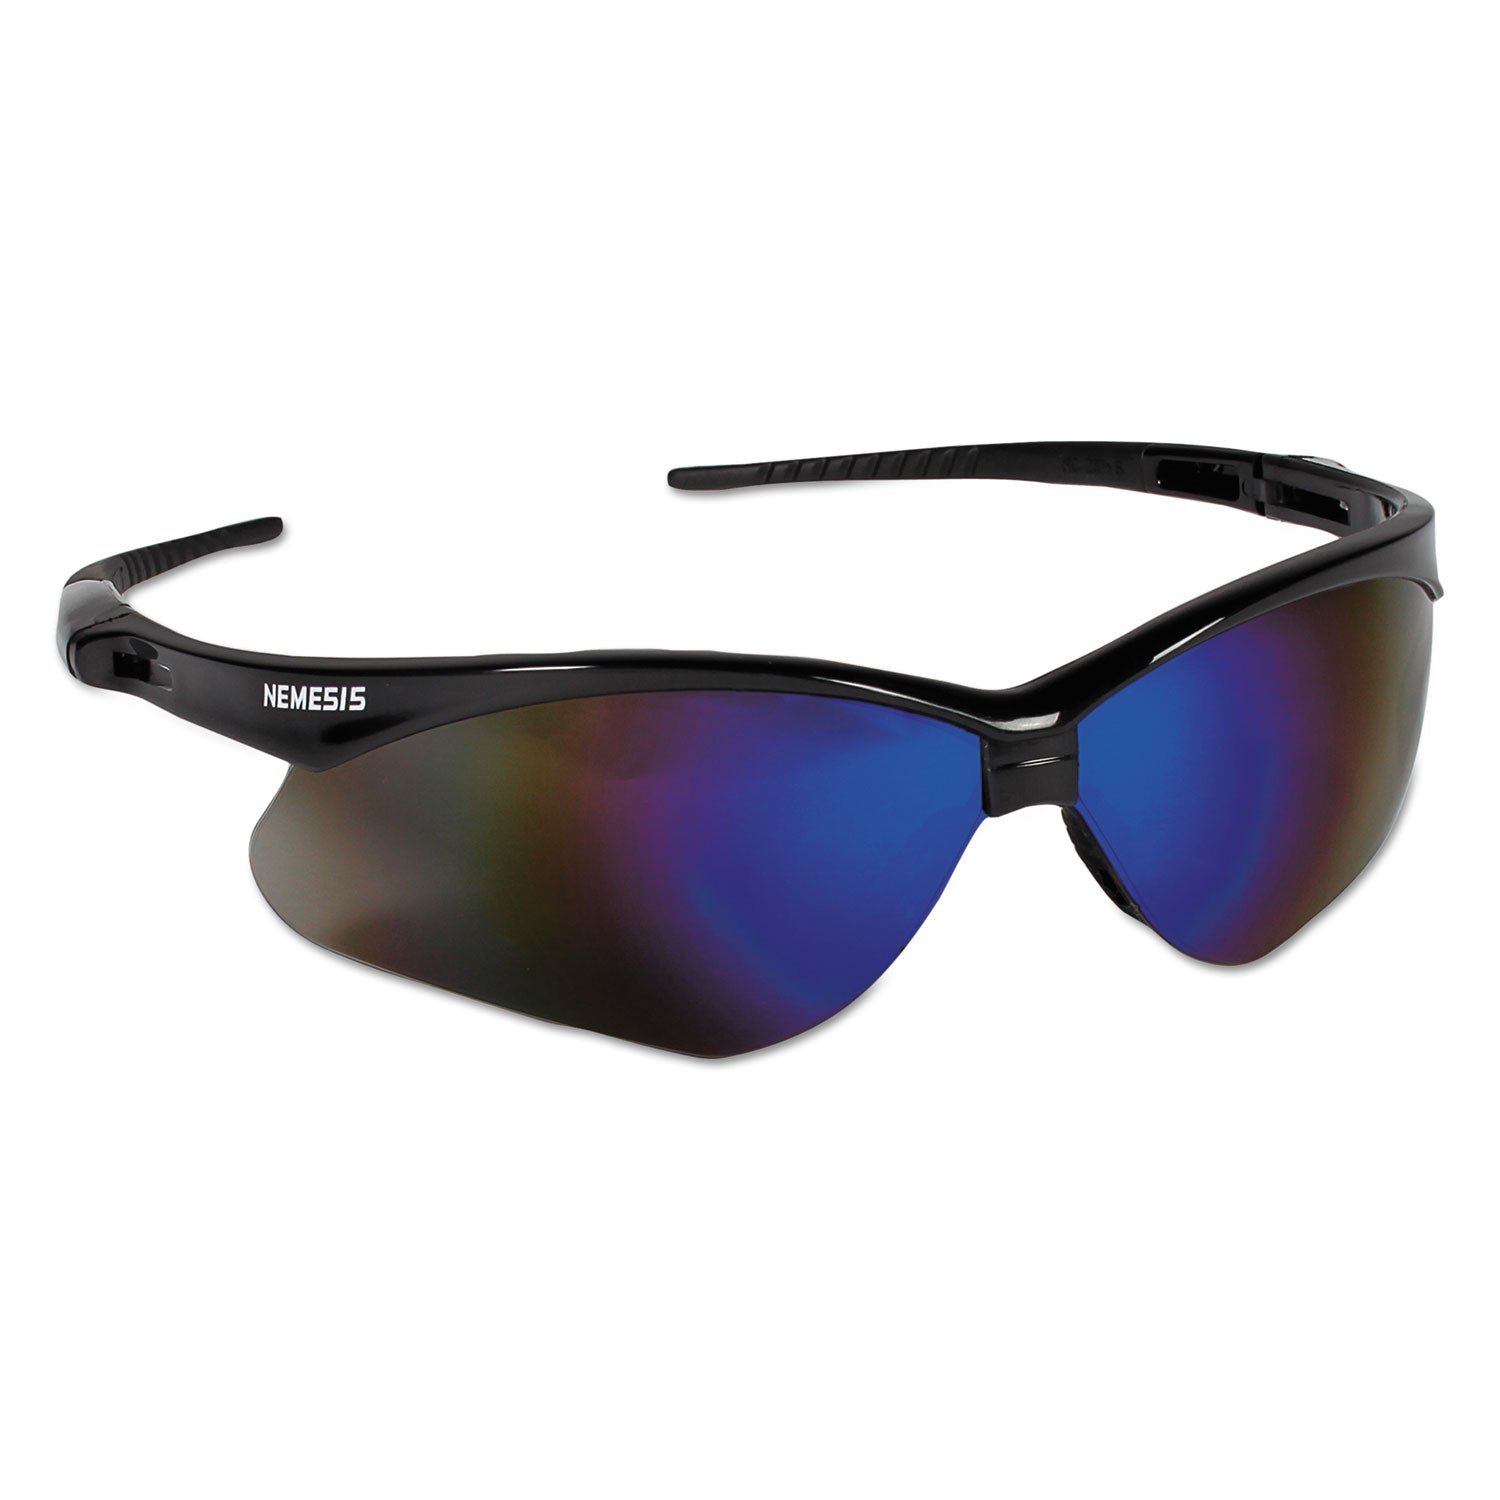 nemesis-safety-glasses-black-frame-blue-mirror-lens_kcc14481 - 1